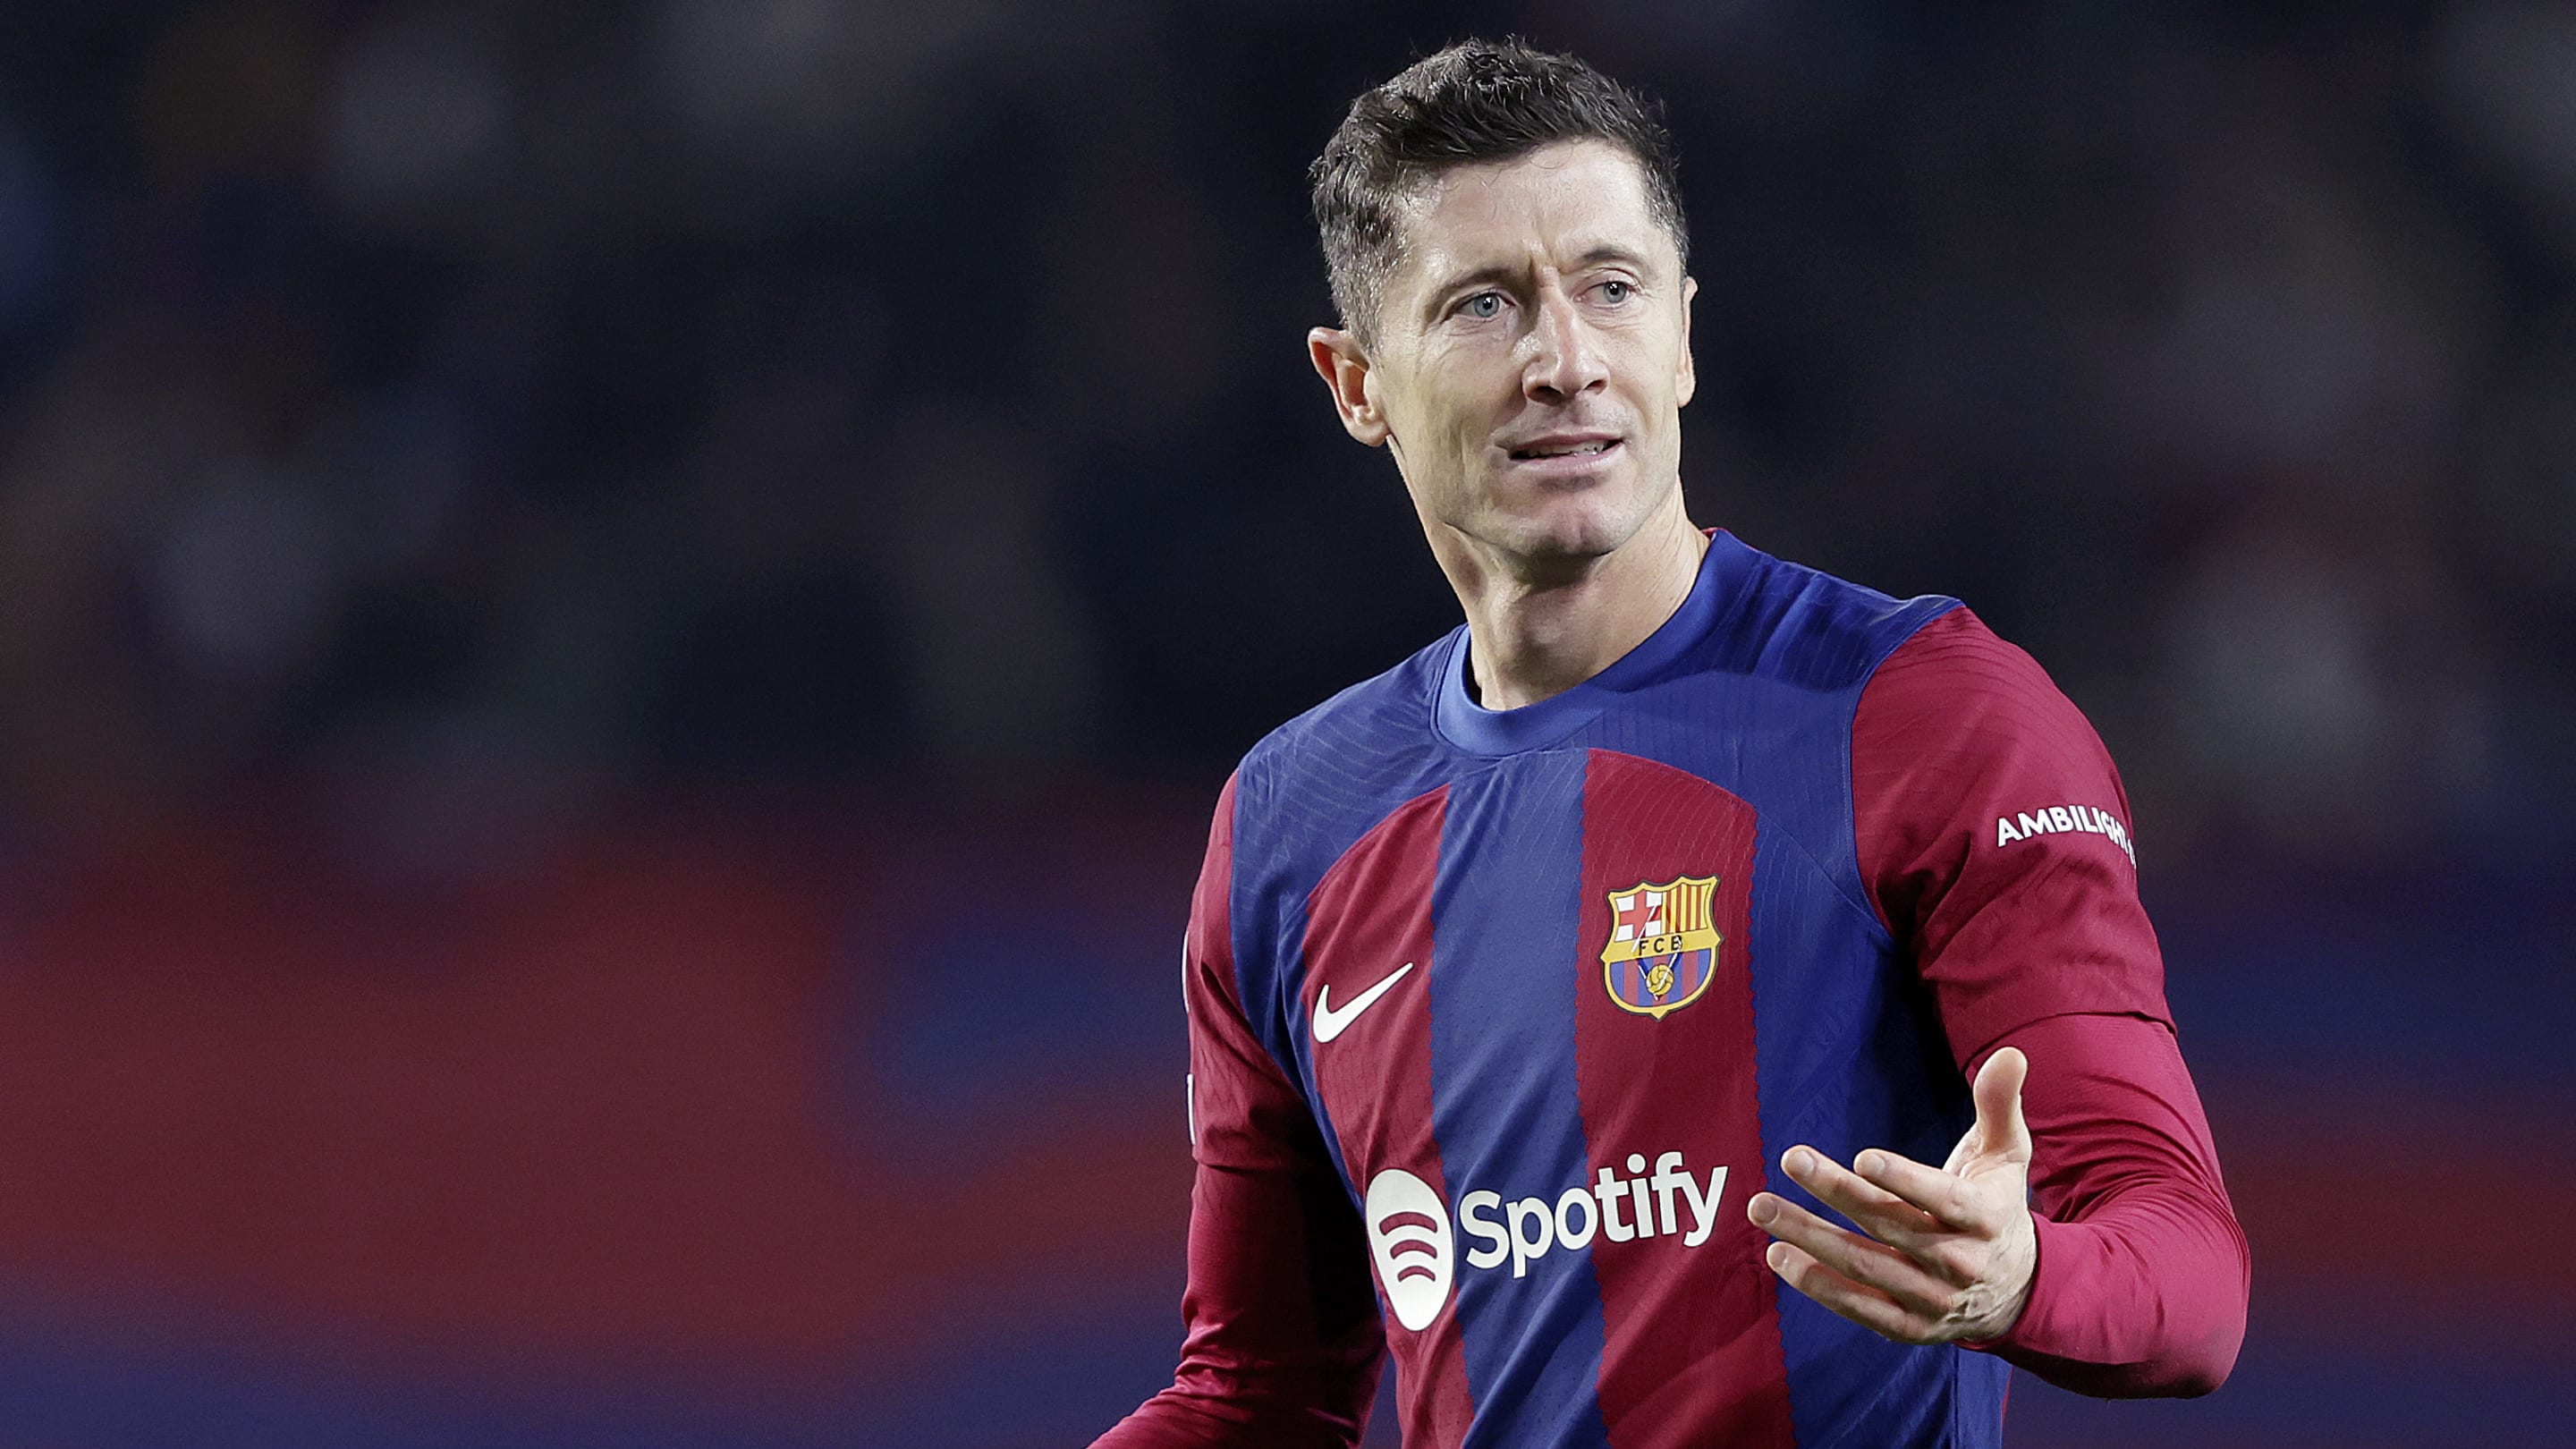 Robert Lewandowski doubles down on Barcelona transfer stance